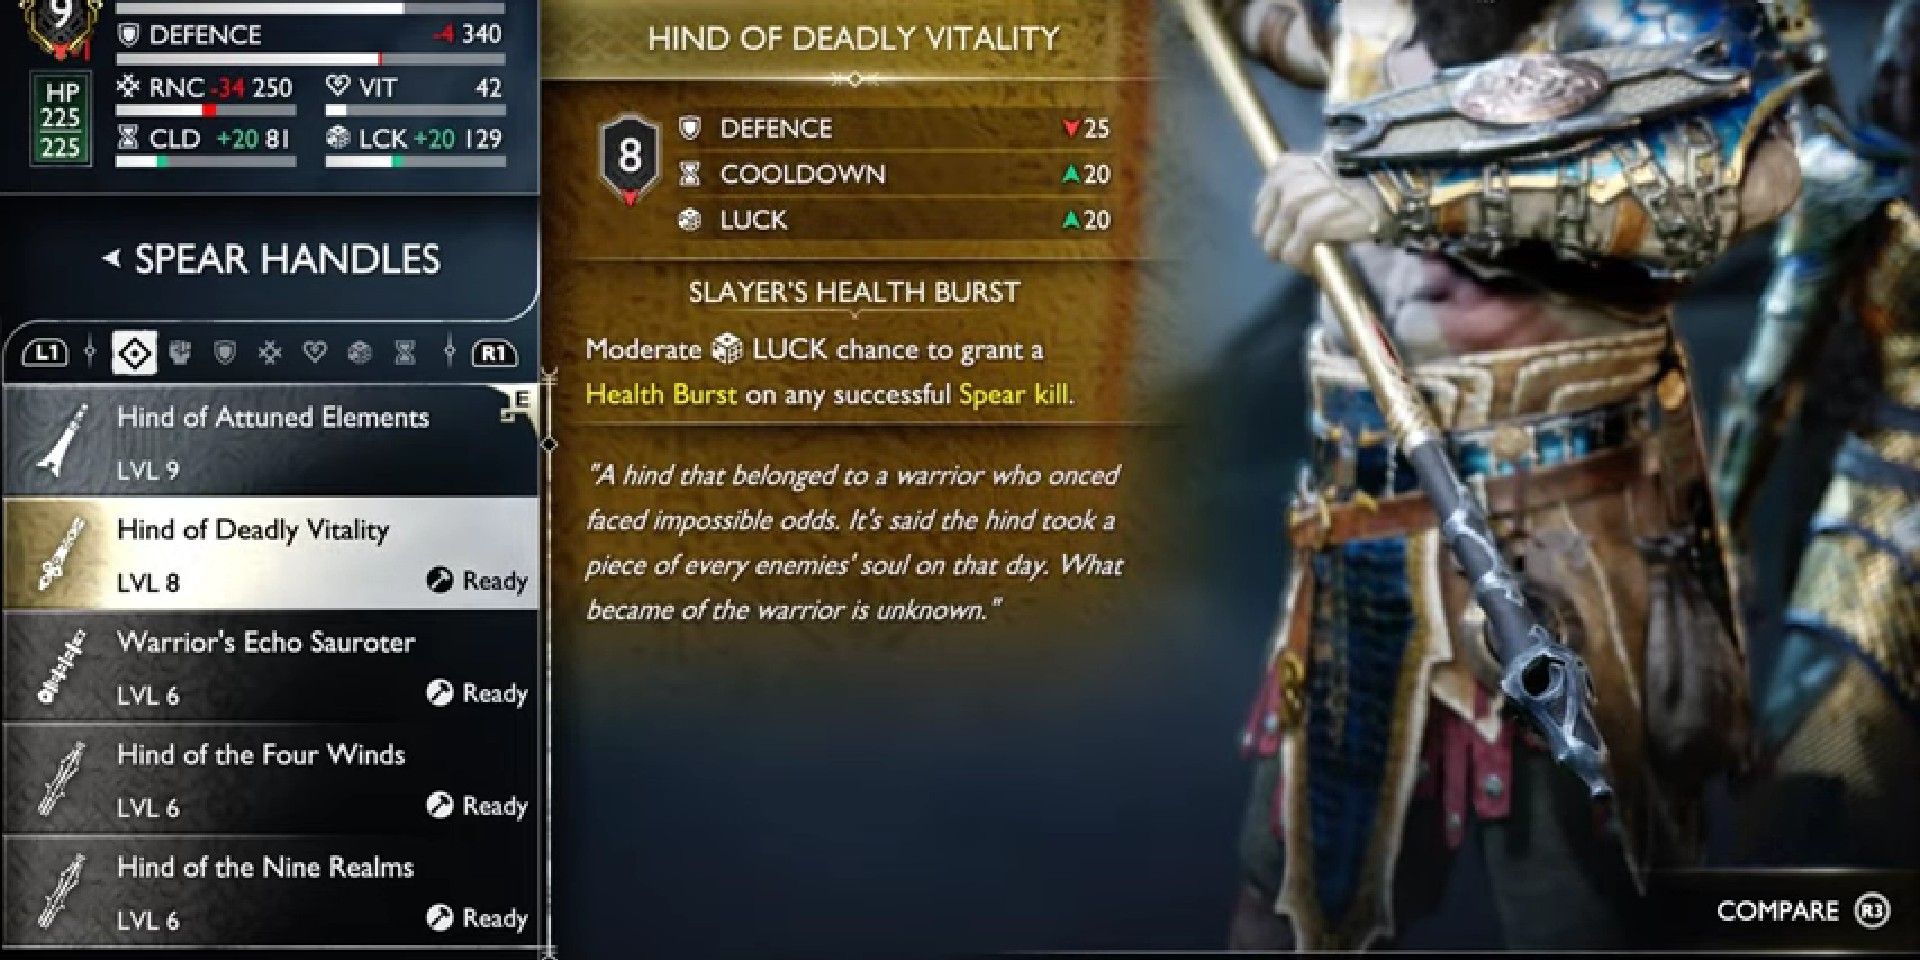 God of War Ragnarok Hind of Deadly Vitality attachment description